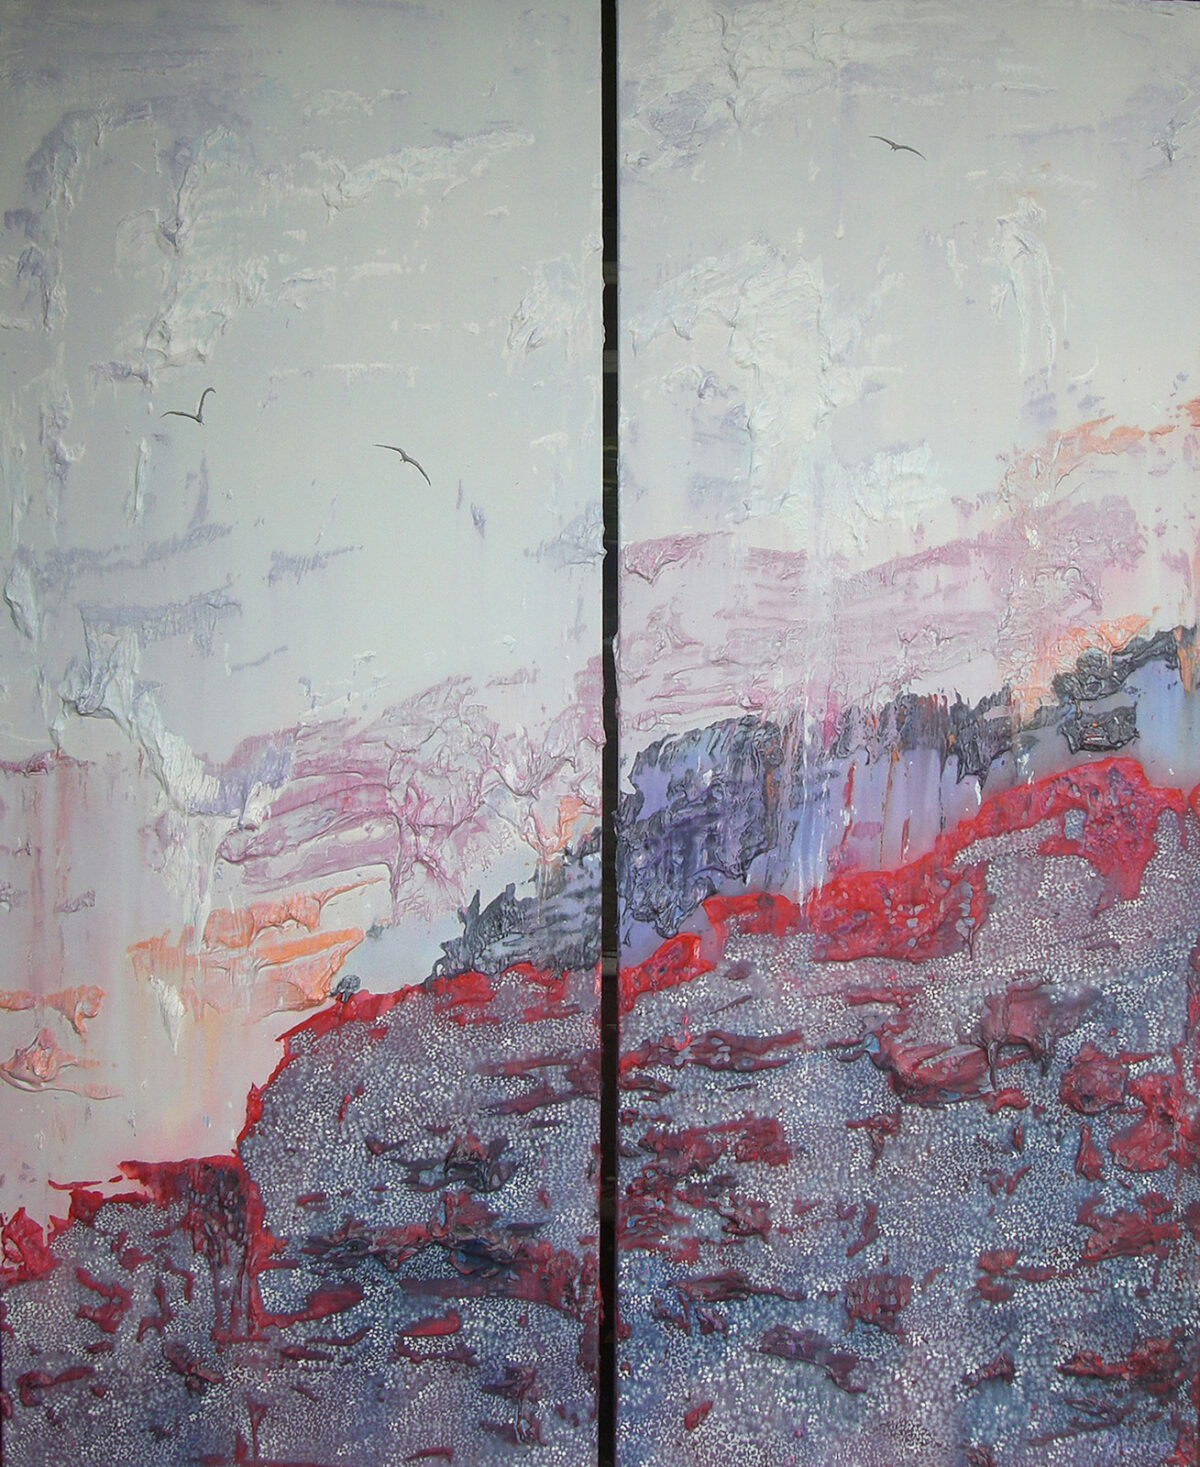 REBECCA PIERCE - Three Waterfalls Three Eagles 150 x 120cm acrylic on canvas on board - 6,600.00AUD